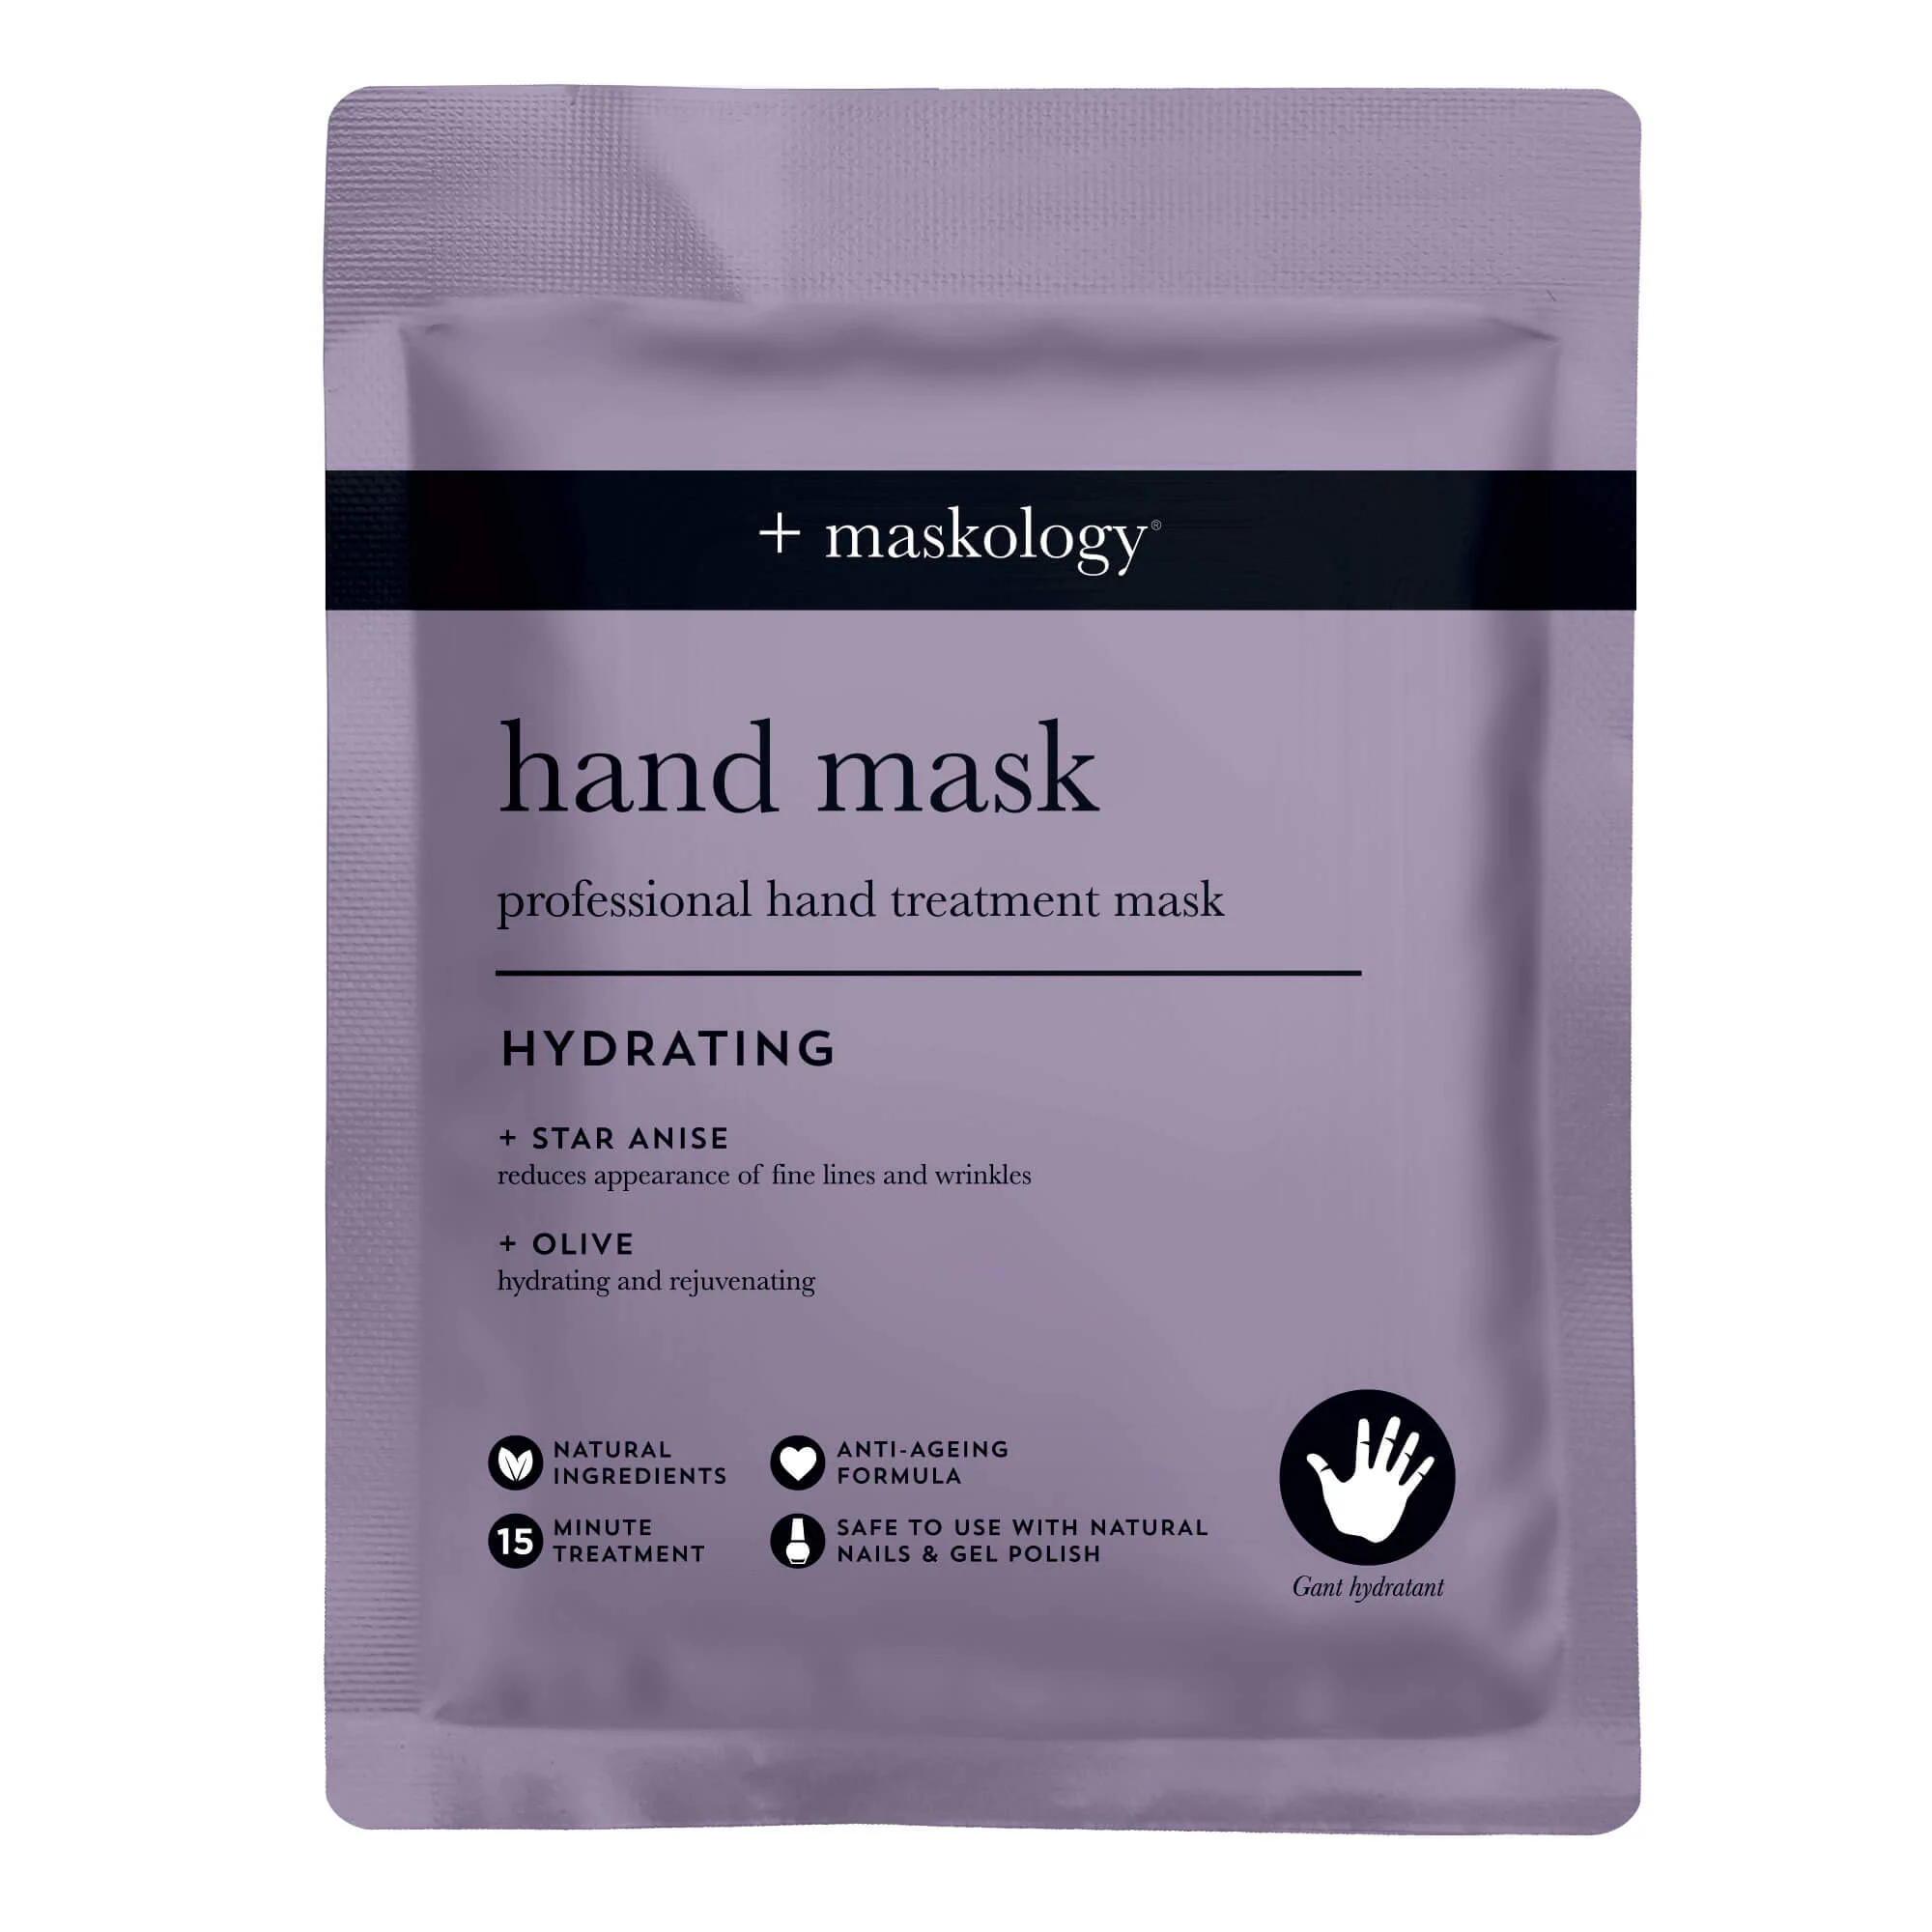 Maskology Hand Mask – Professional Hand Treatment Mask